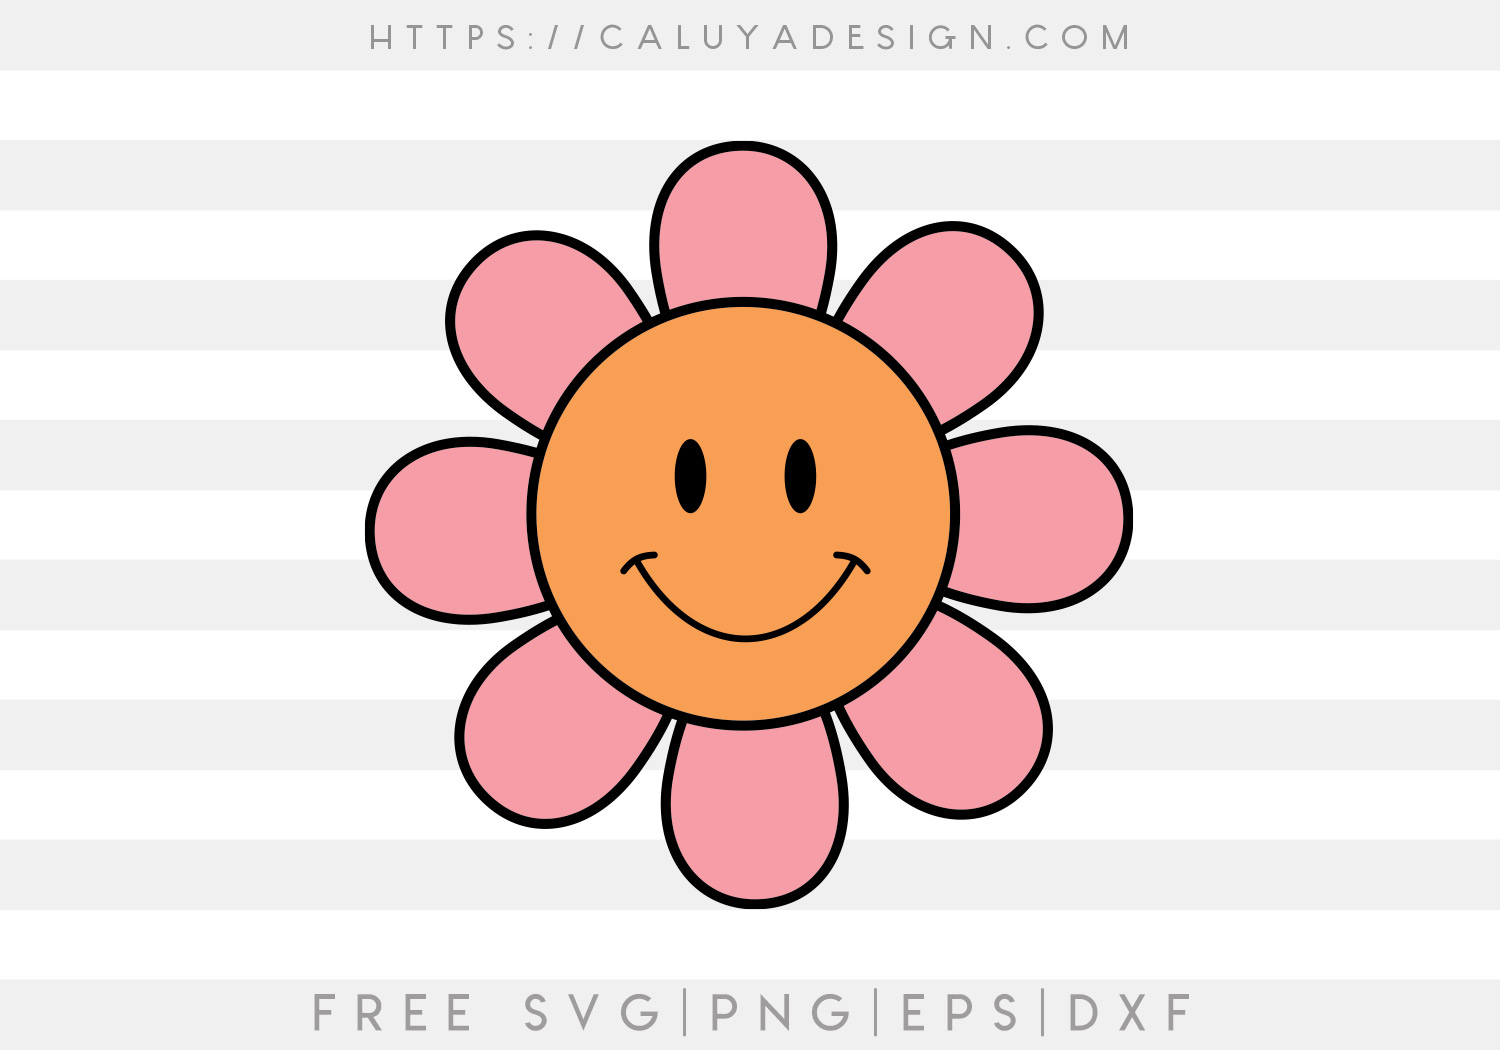 Free Retro Smiley Flower SVG